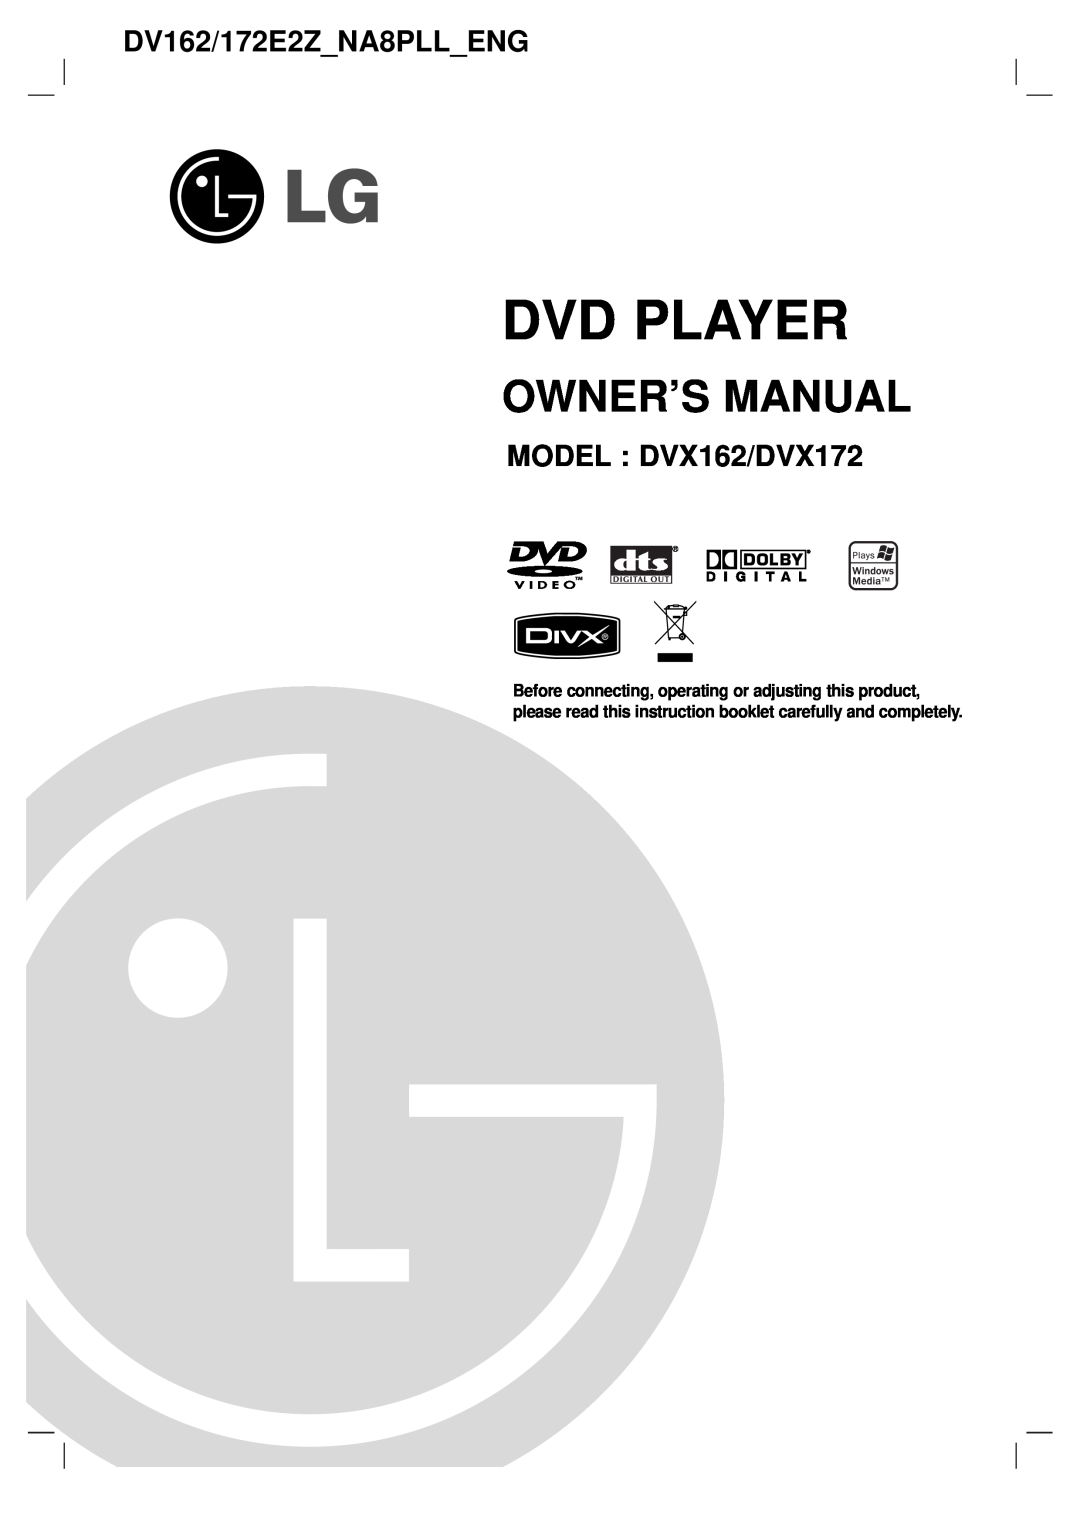 LG Electronics owner manual Owner’S Manual, Dvd Player, DV162/172E2ZNA8PLLENG, MODEL DVX162/DVX172 